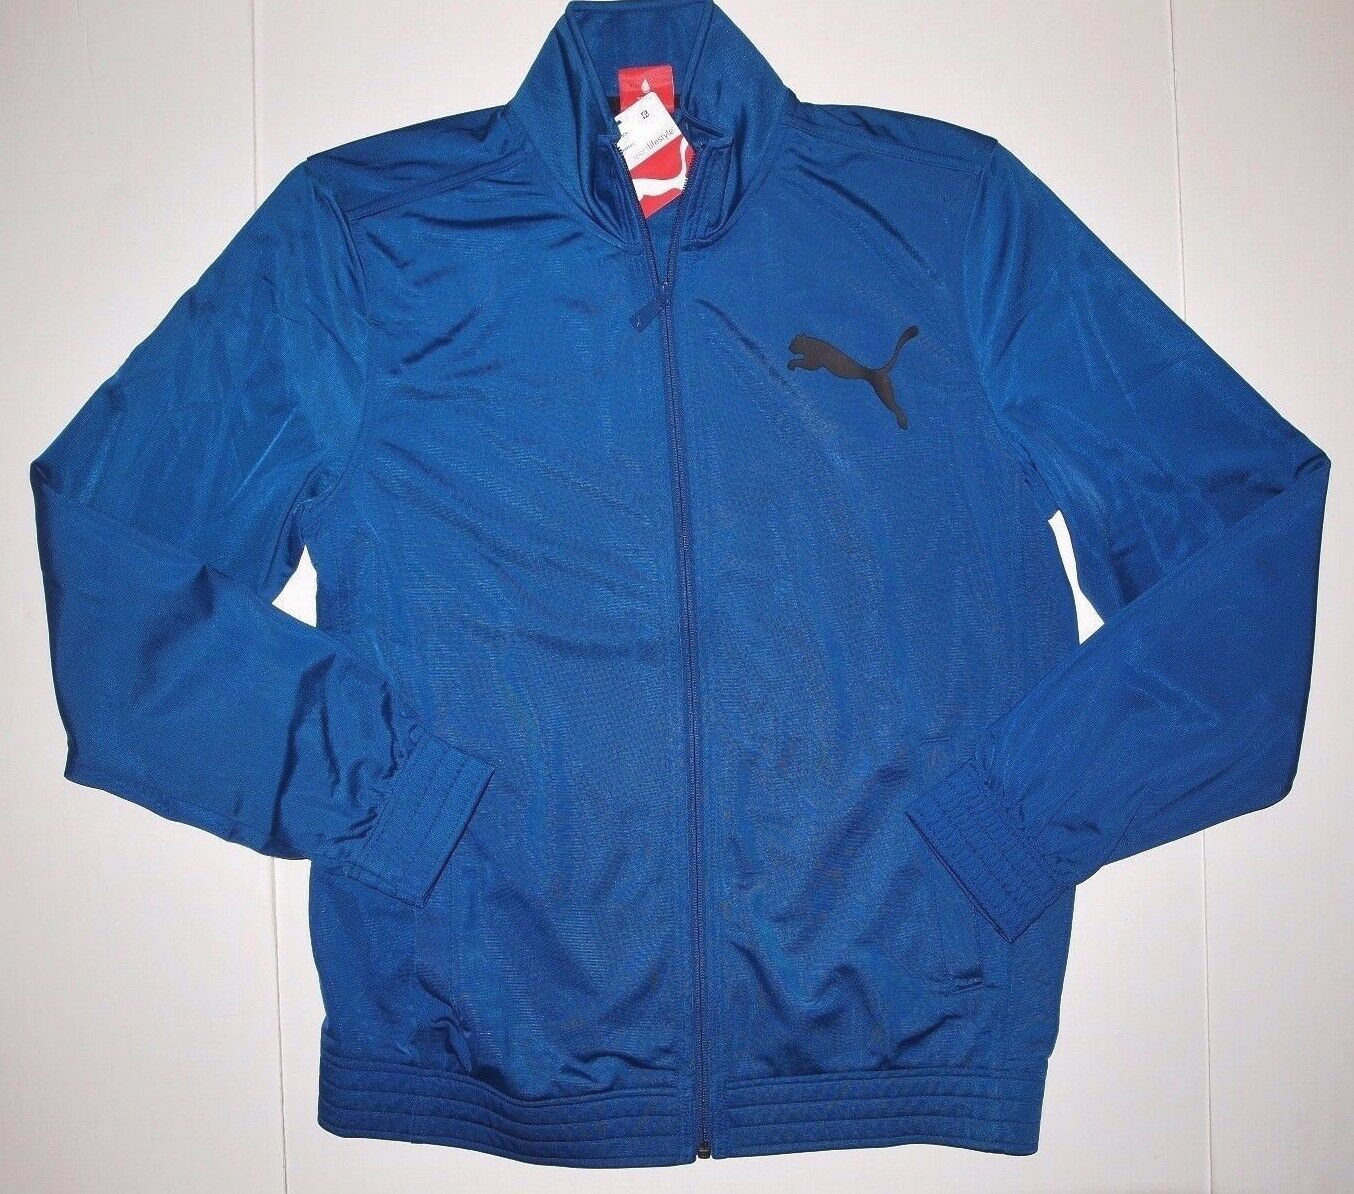 Puma tricot contrast midnight blue men's track jacket NWT - Men's Clothing